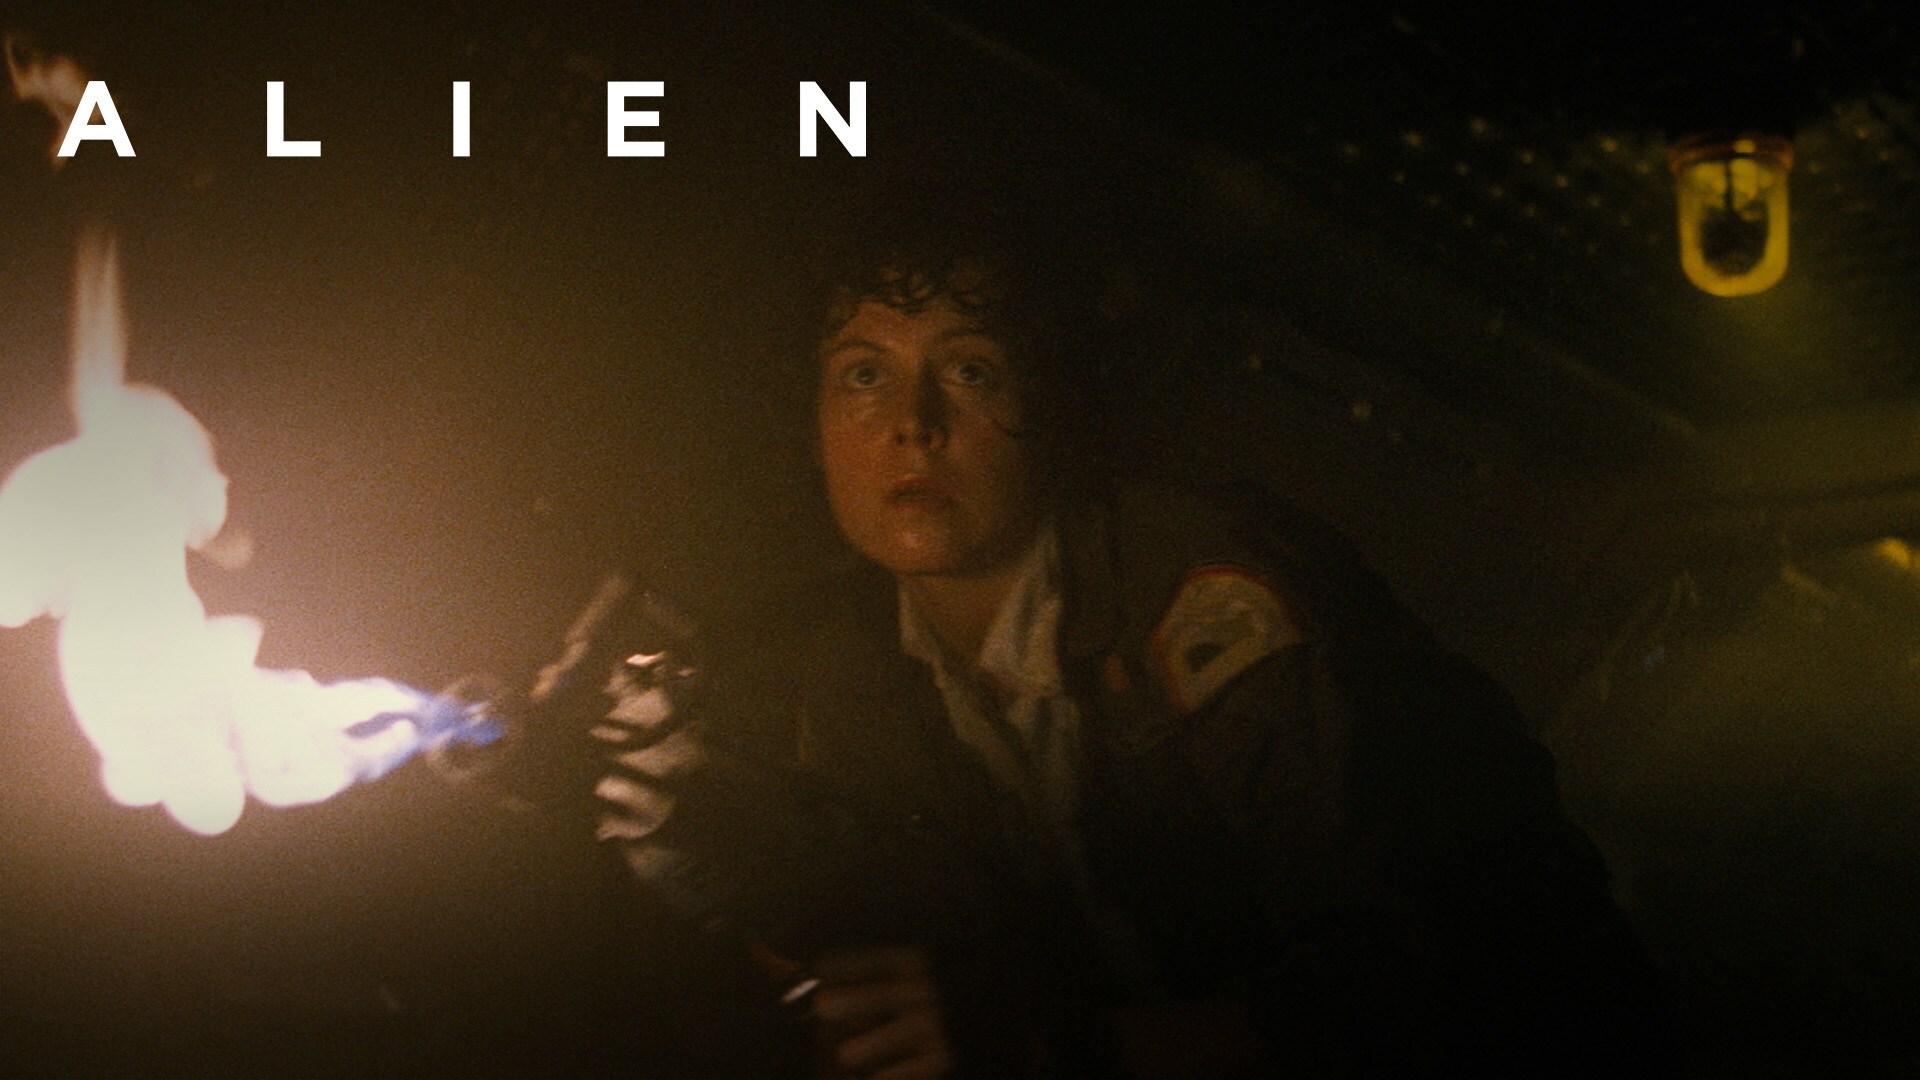 Alien | Back In Theaters April 26